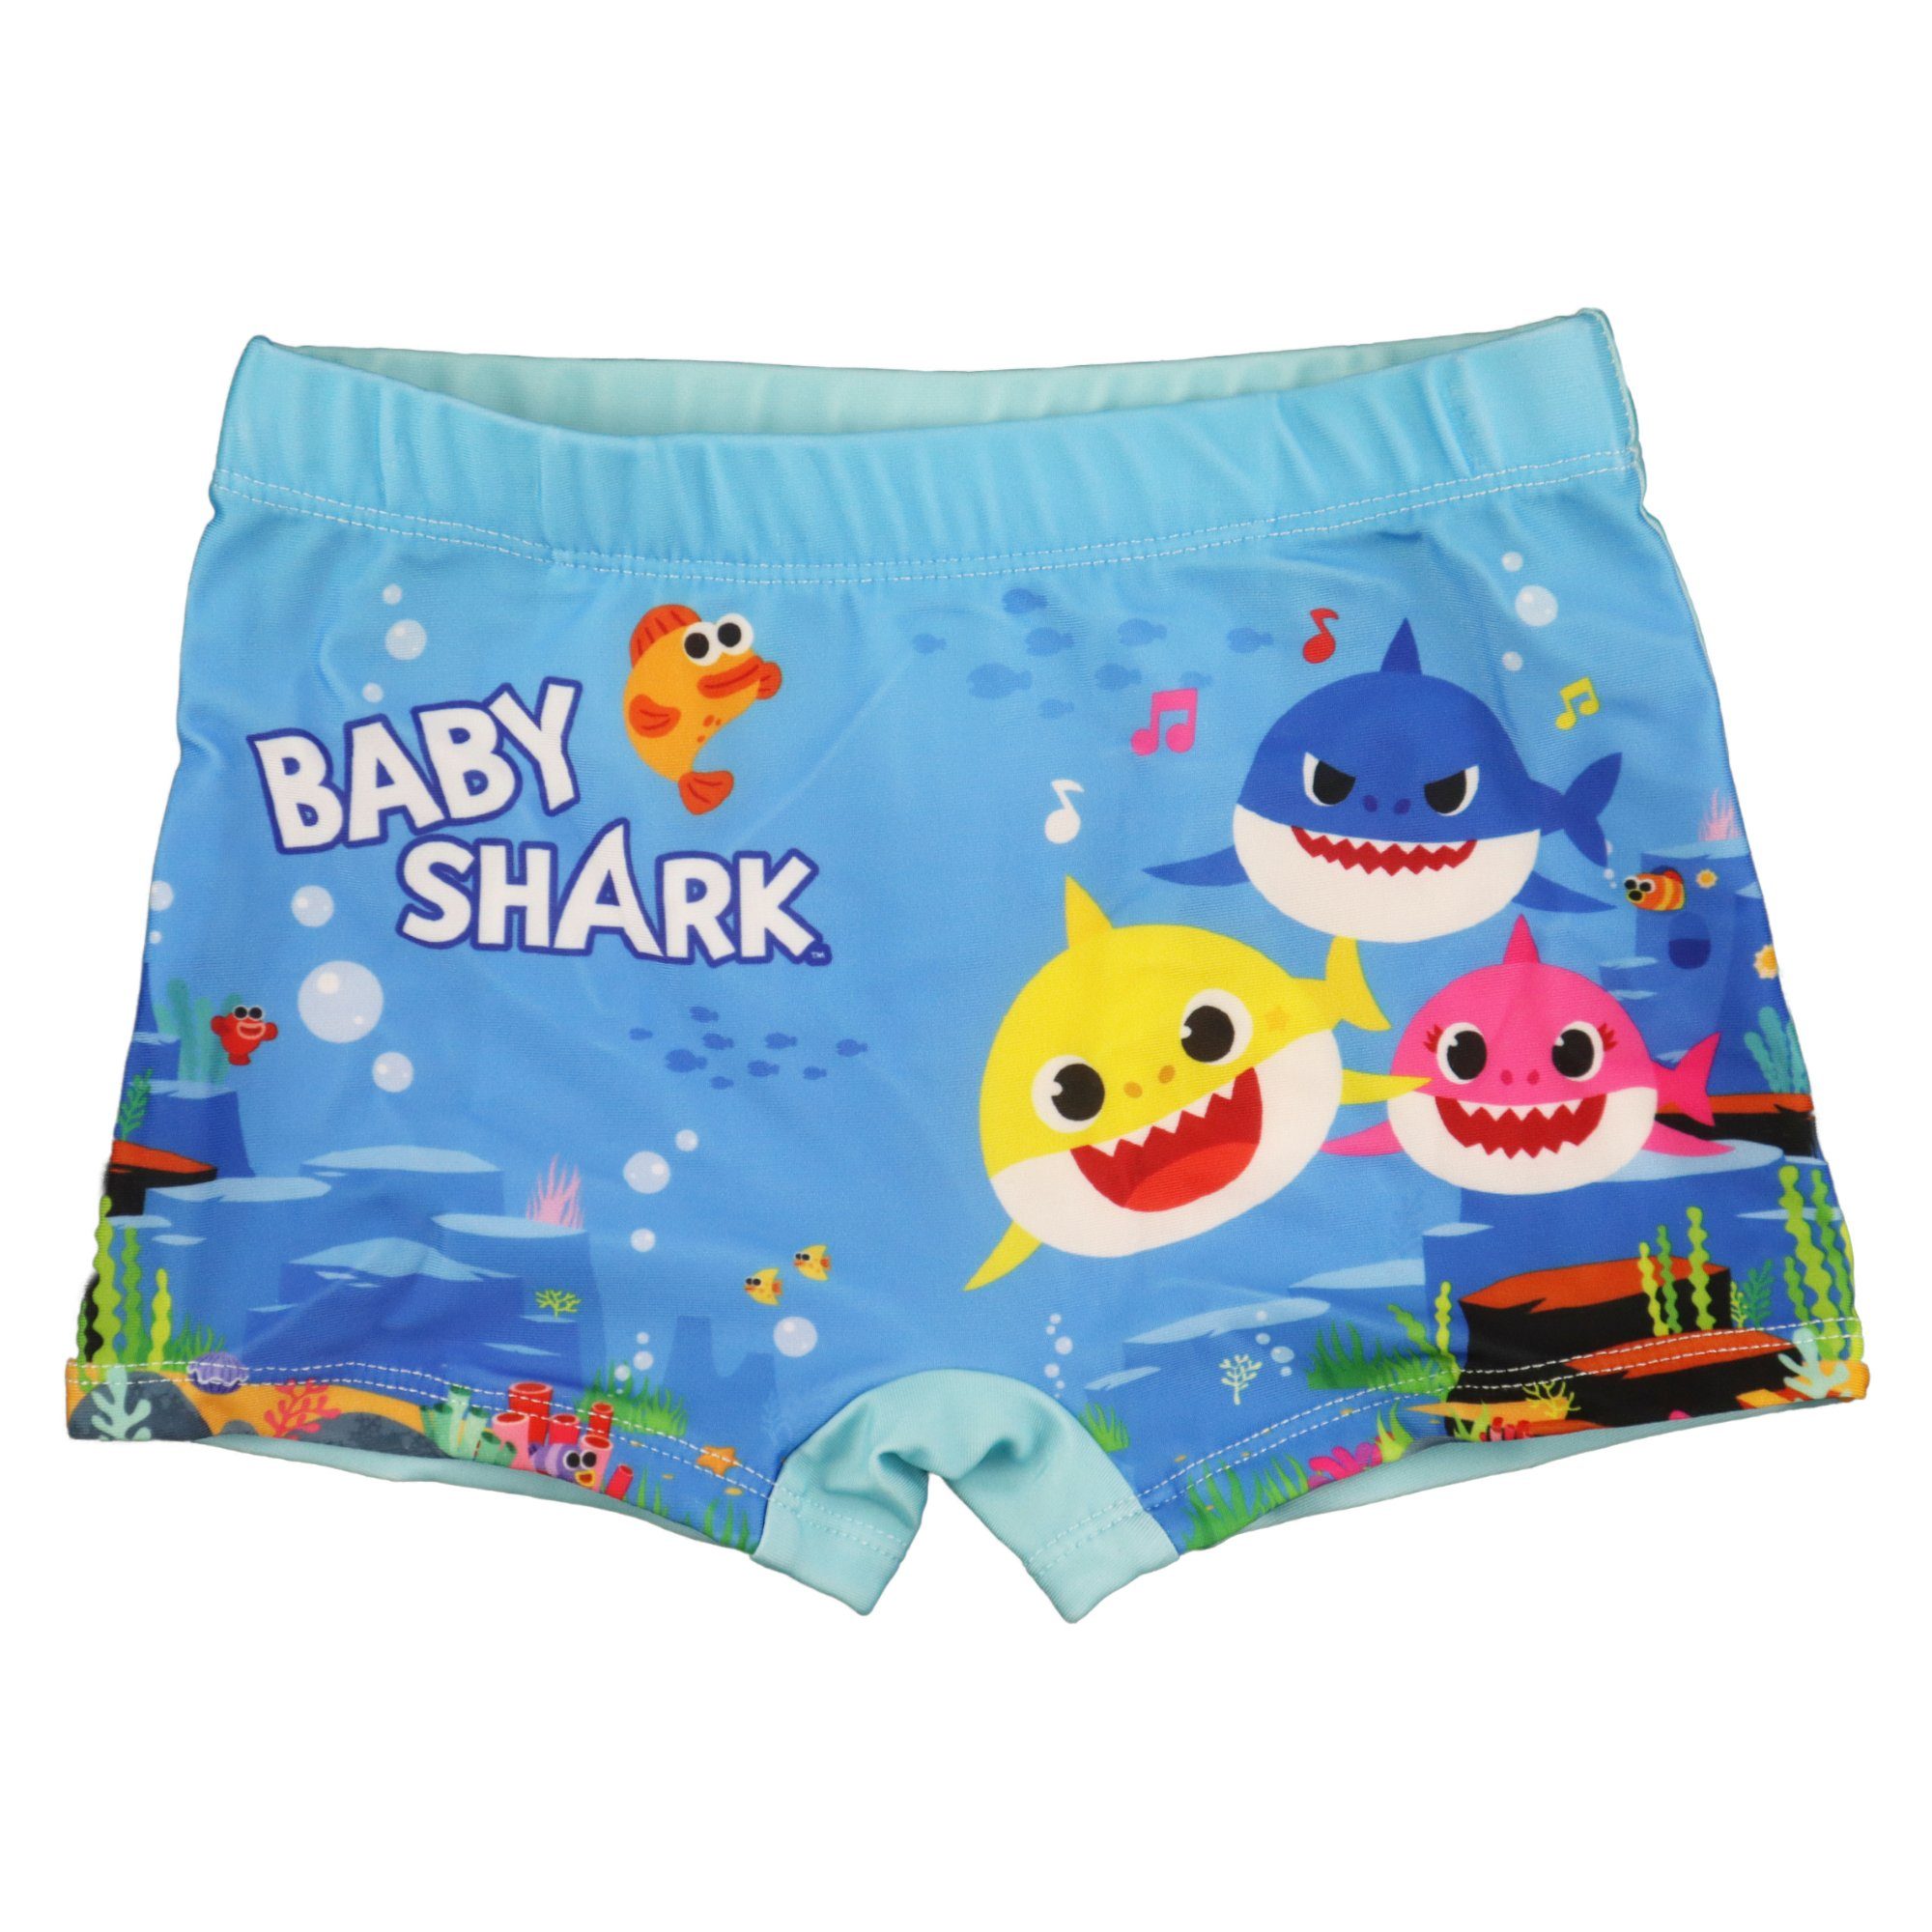 Baby Shark 92 Shark 110 Schwimmhose Jungen Kinder bis Gr. Baby Badehose